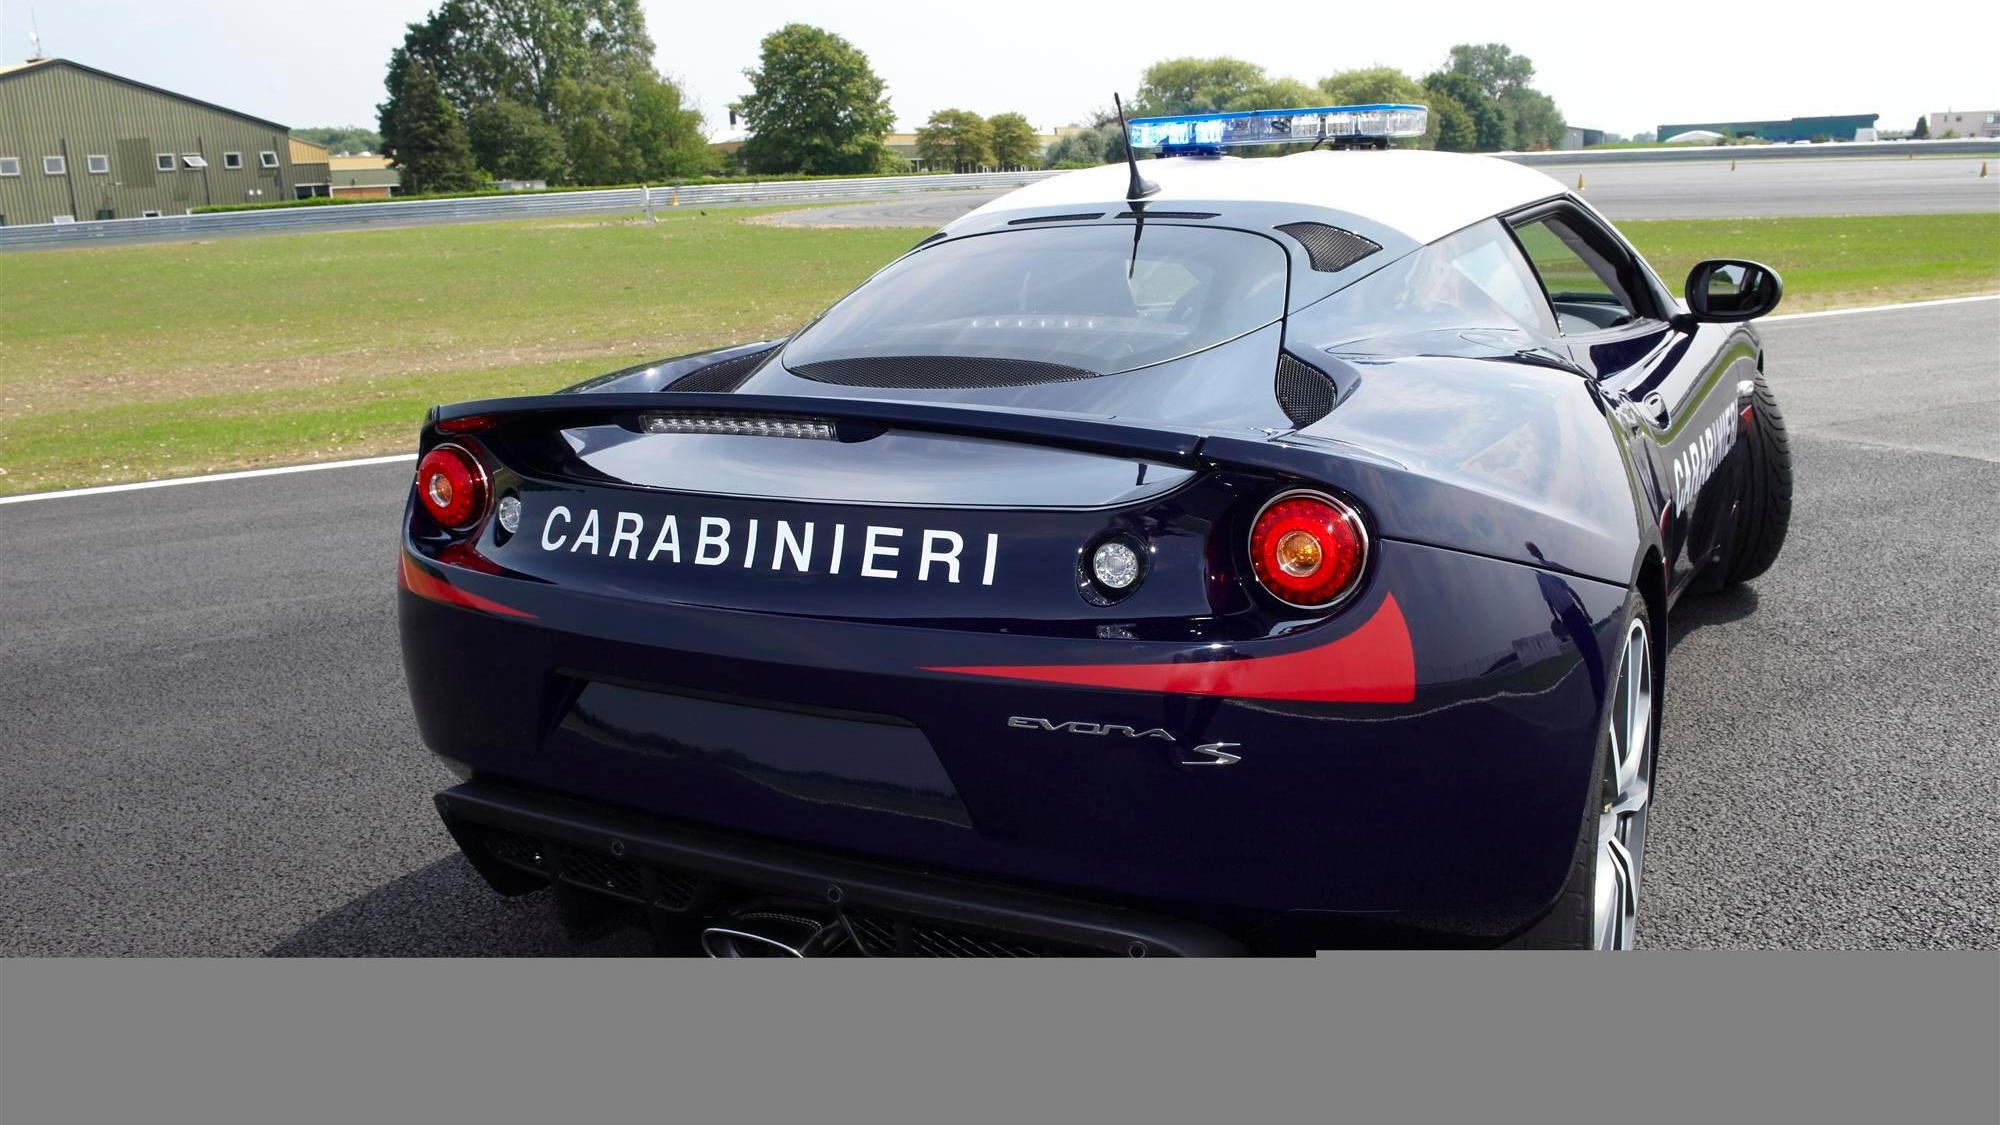 Lotus Evora S enters service with Italian Carabinieri